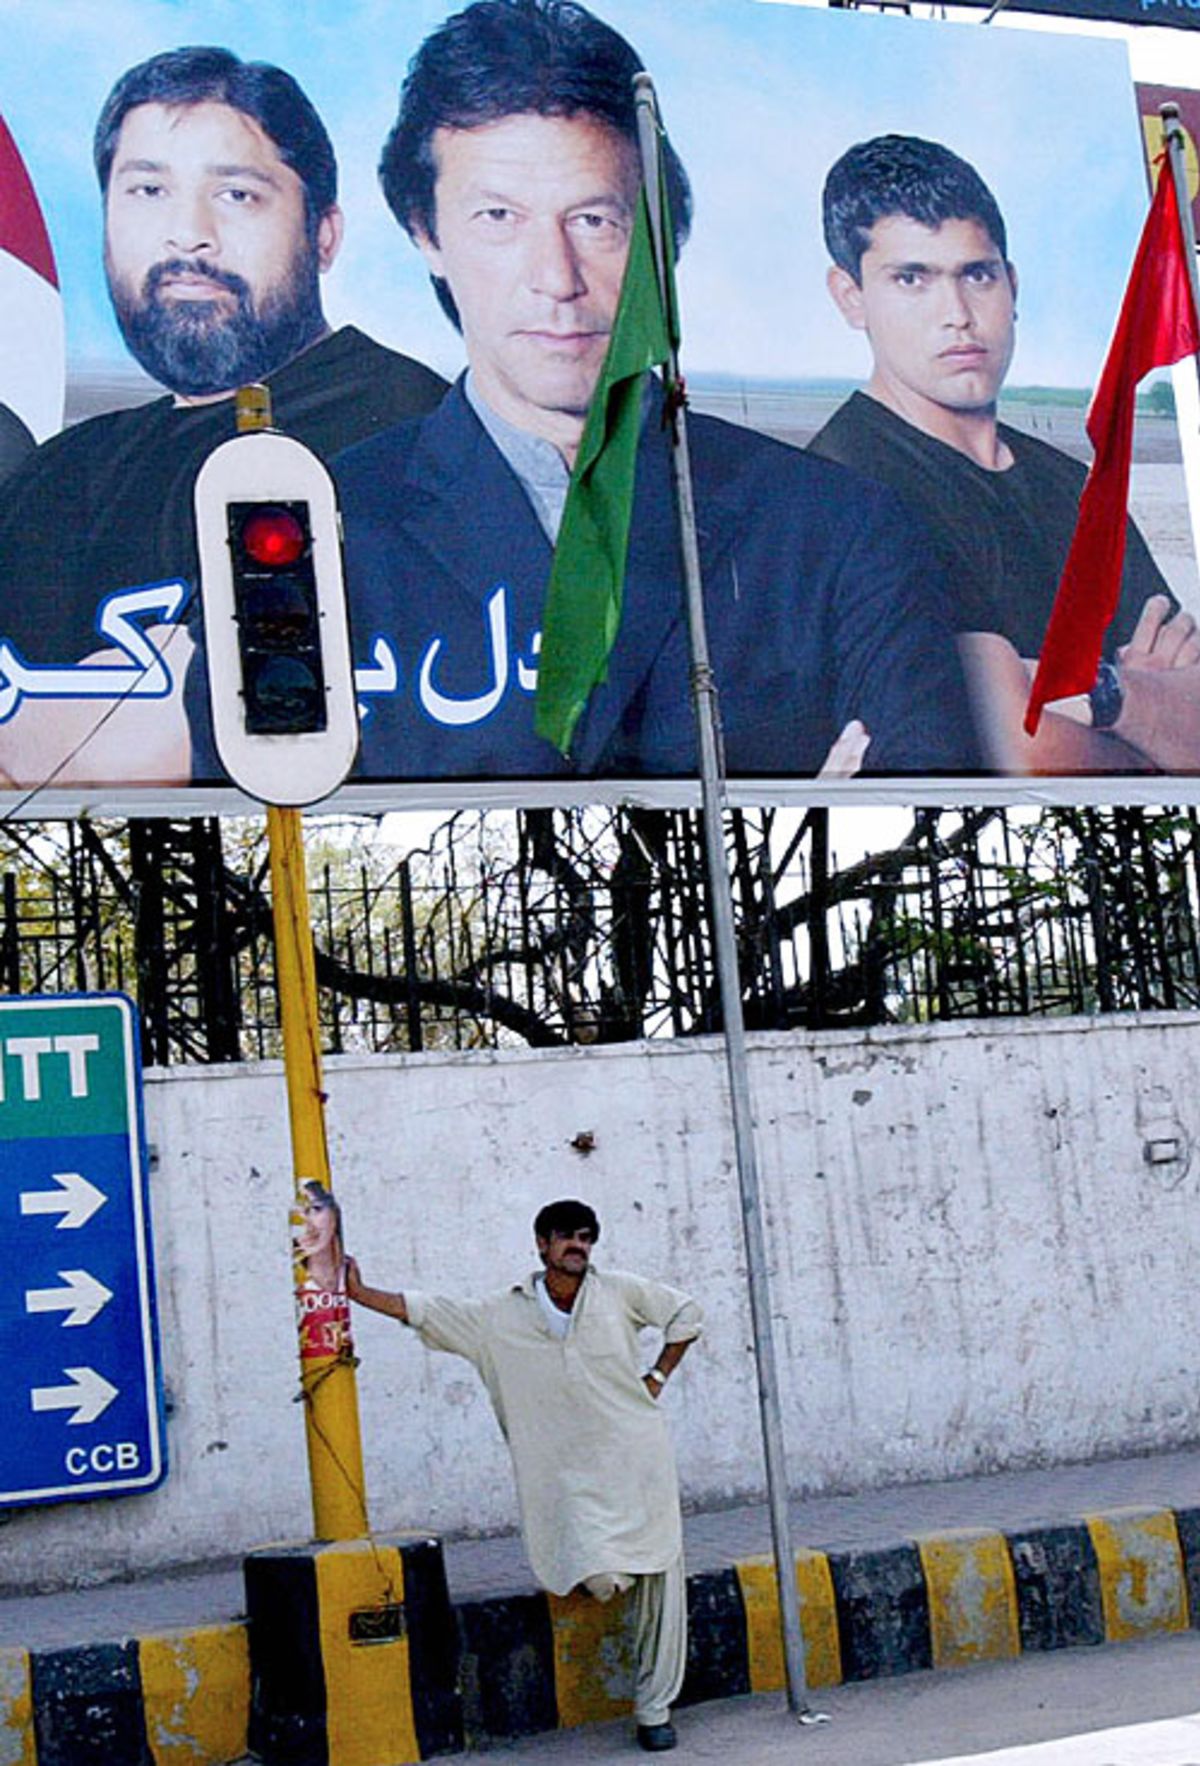 A pedestrian in Islamabad stands beneath a billboard showing Inzamam-ul-Haq, Imran Khan and Kamran Akmal, Islamabad, March 29, 2007